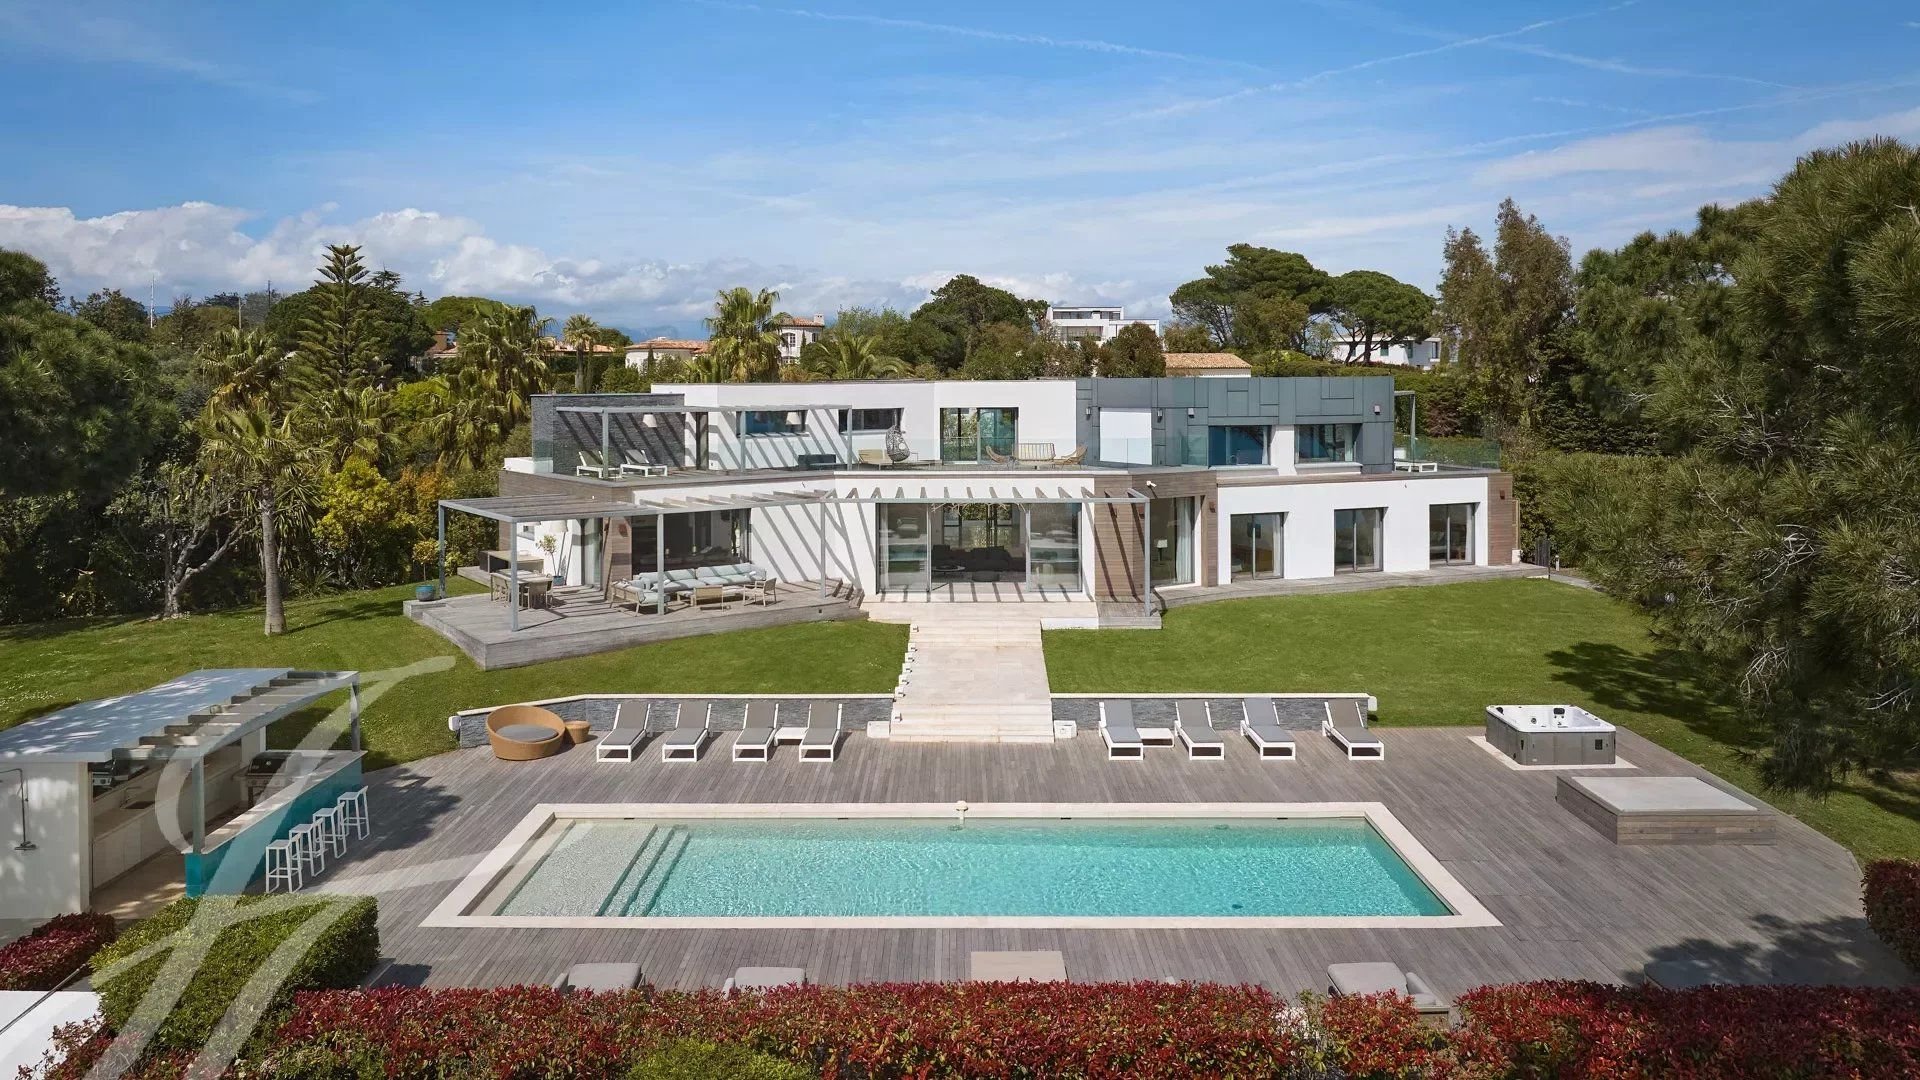 Einfamilienhaus zur Miete Provisionsfrei 550 m² 6.200 m² Grundstück La Maure-Super Cannes Cannes 06220